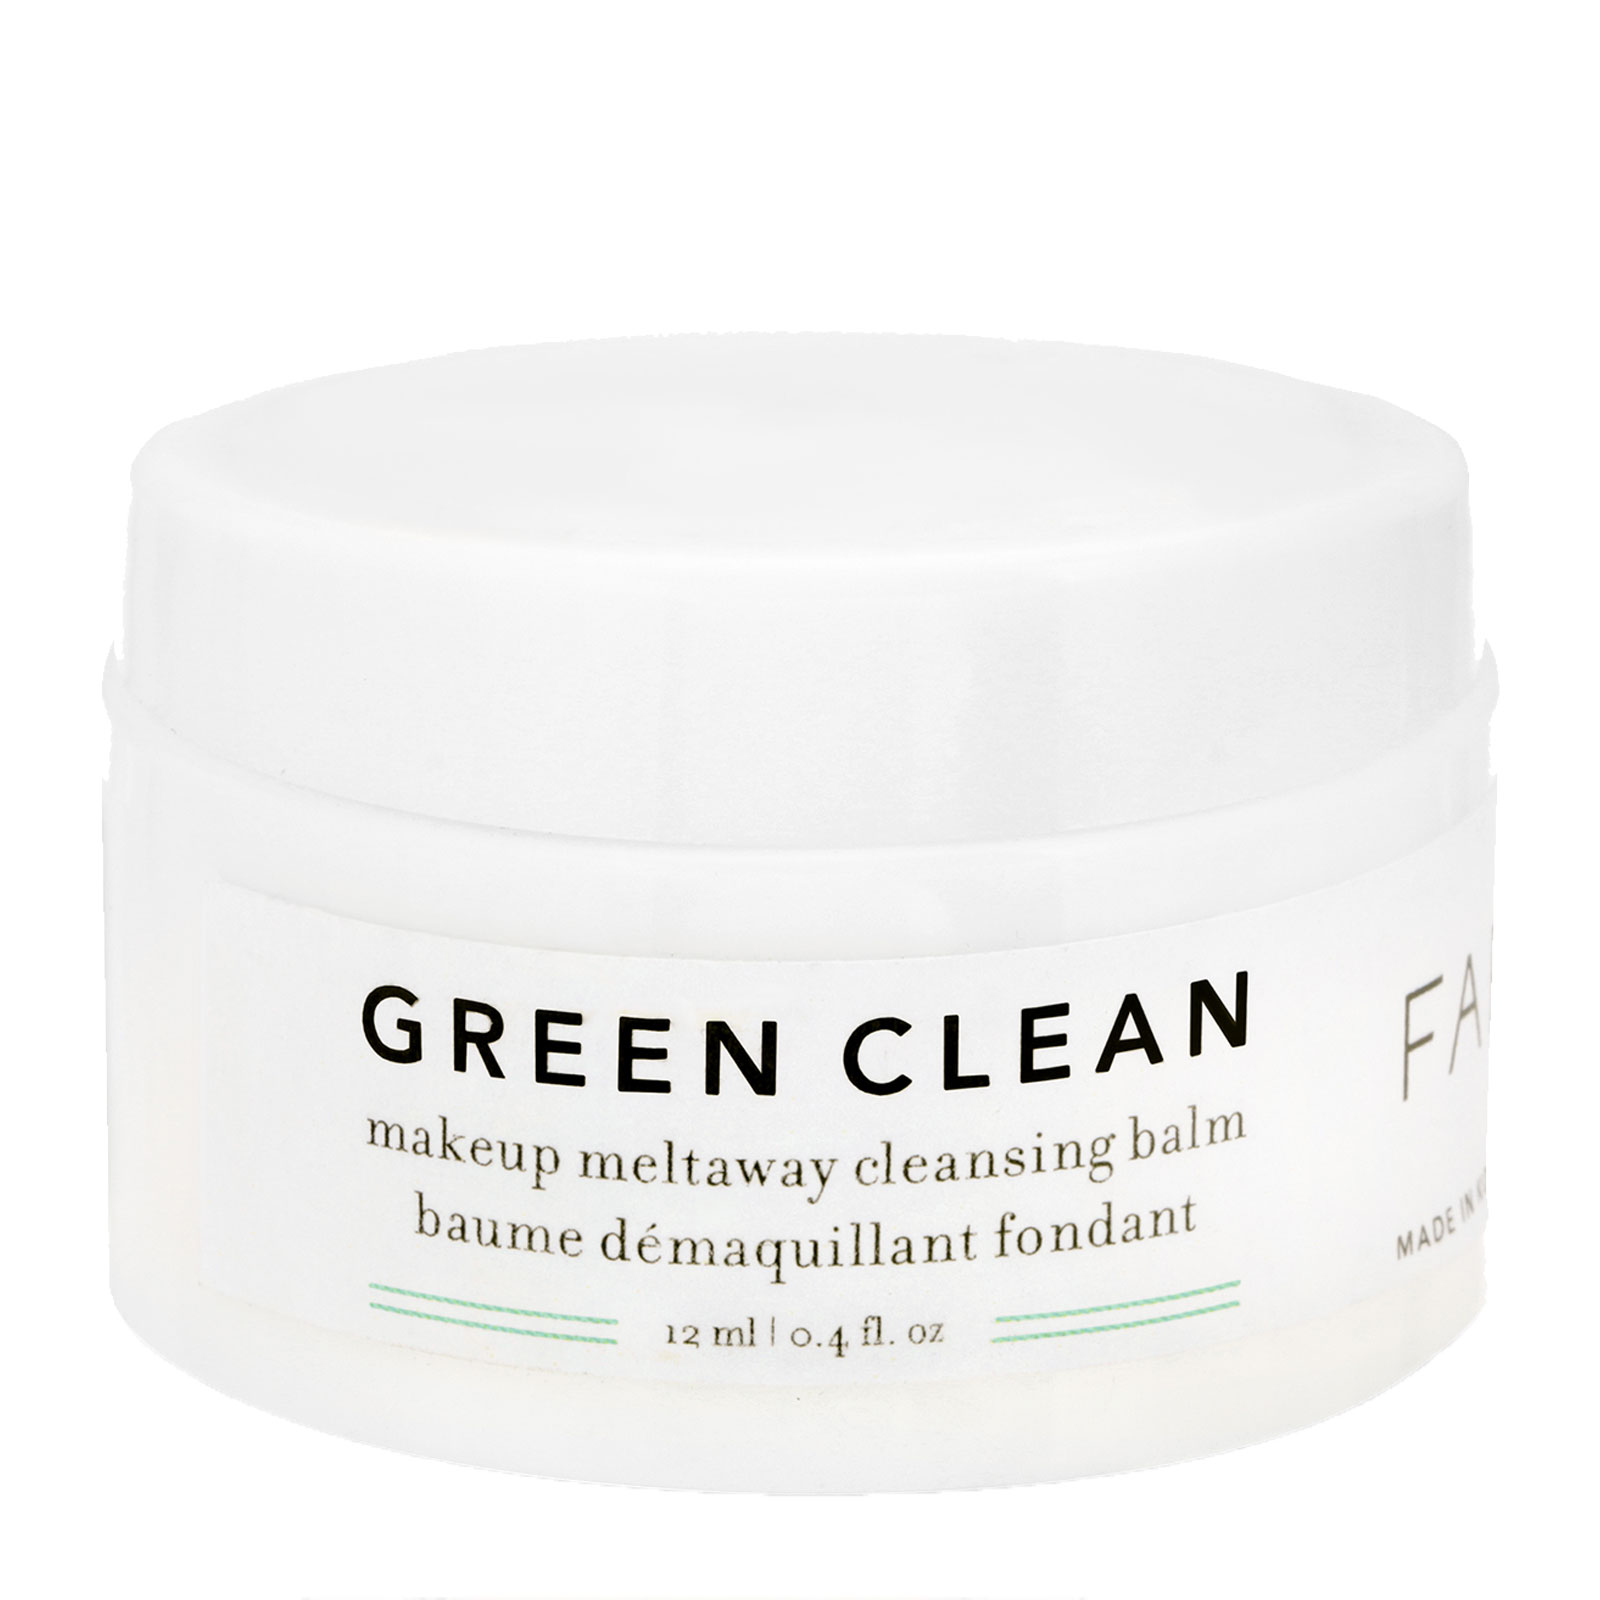 Farmacy Beauty GREEN CLEAN Makeup Meltaway Cleansing Balm 12ml  -HK